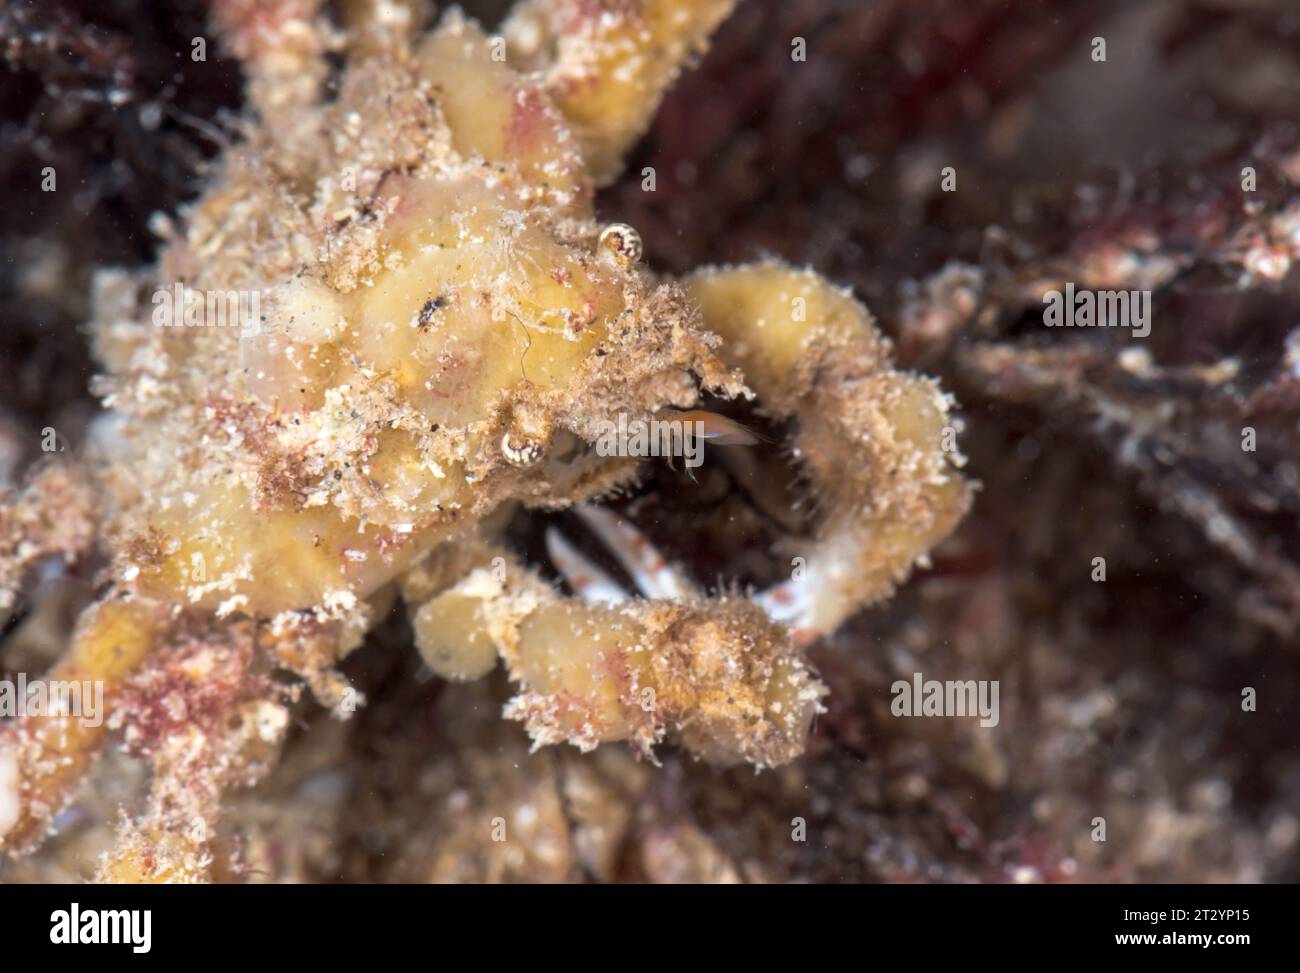 Scorpion Spider Crab camouflaged with sponges (Inachus dorsettensis), Inachidae, Decapoda, Crustacean. Sussex, UK Stock Photo